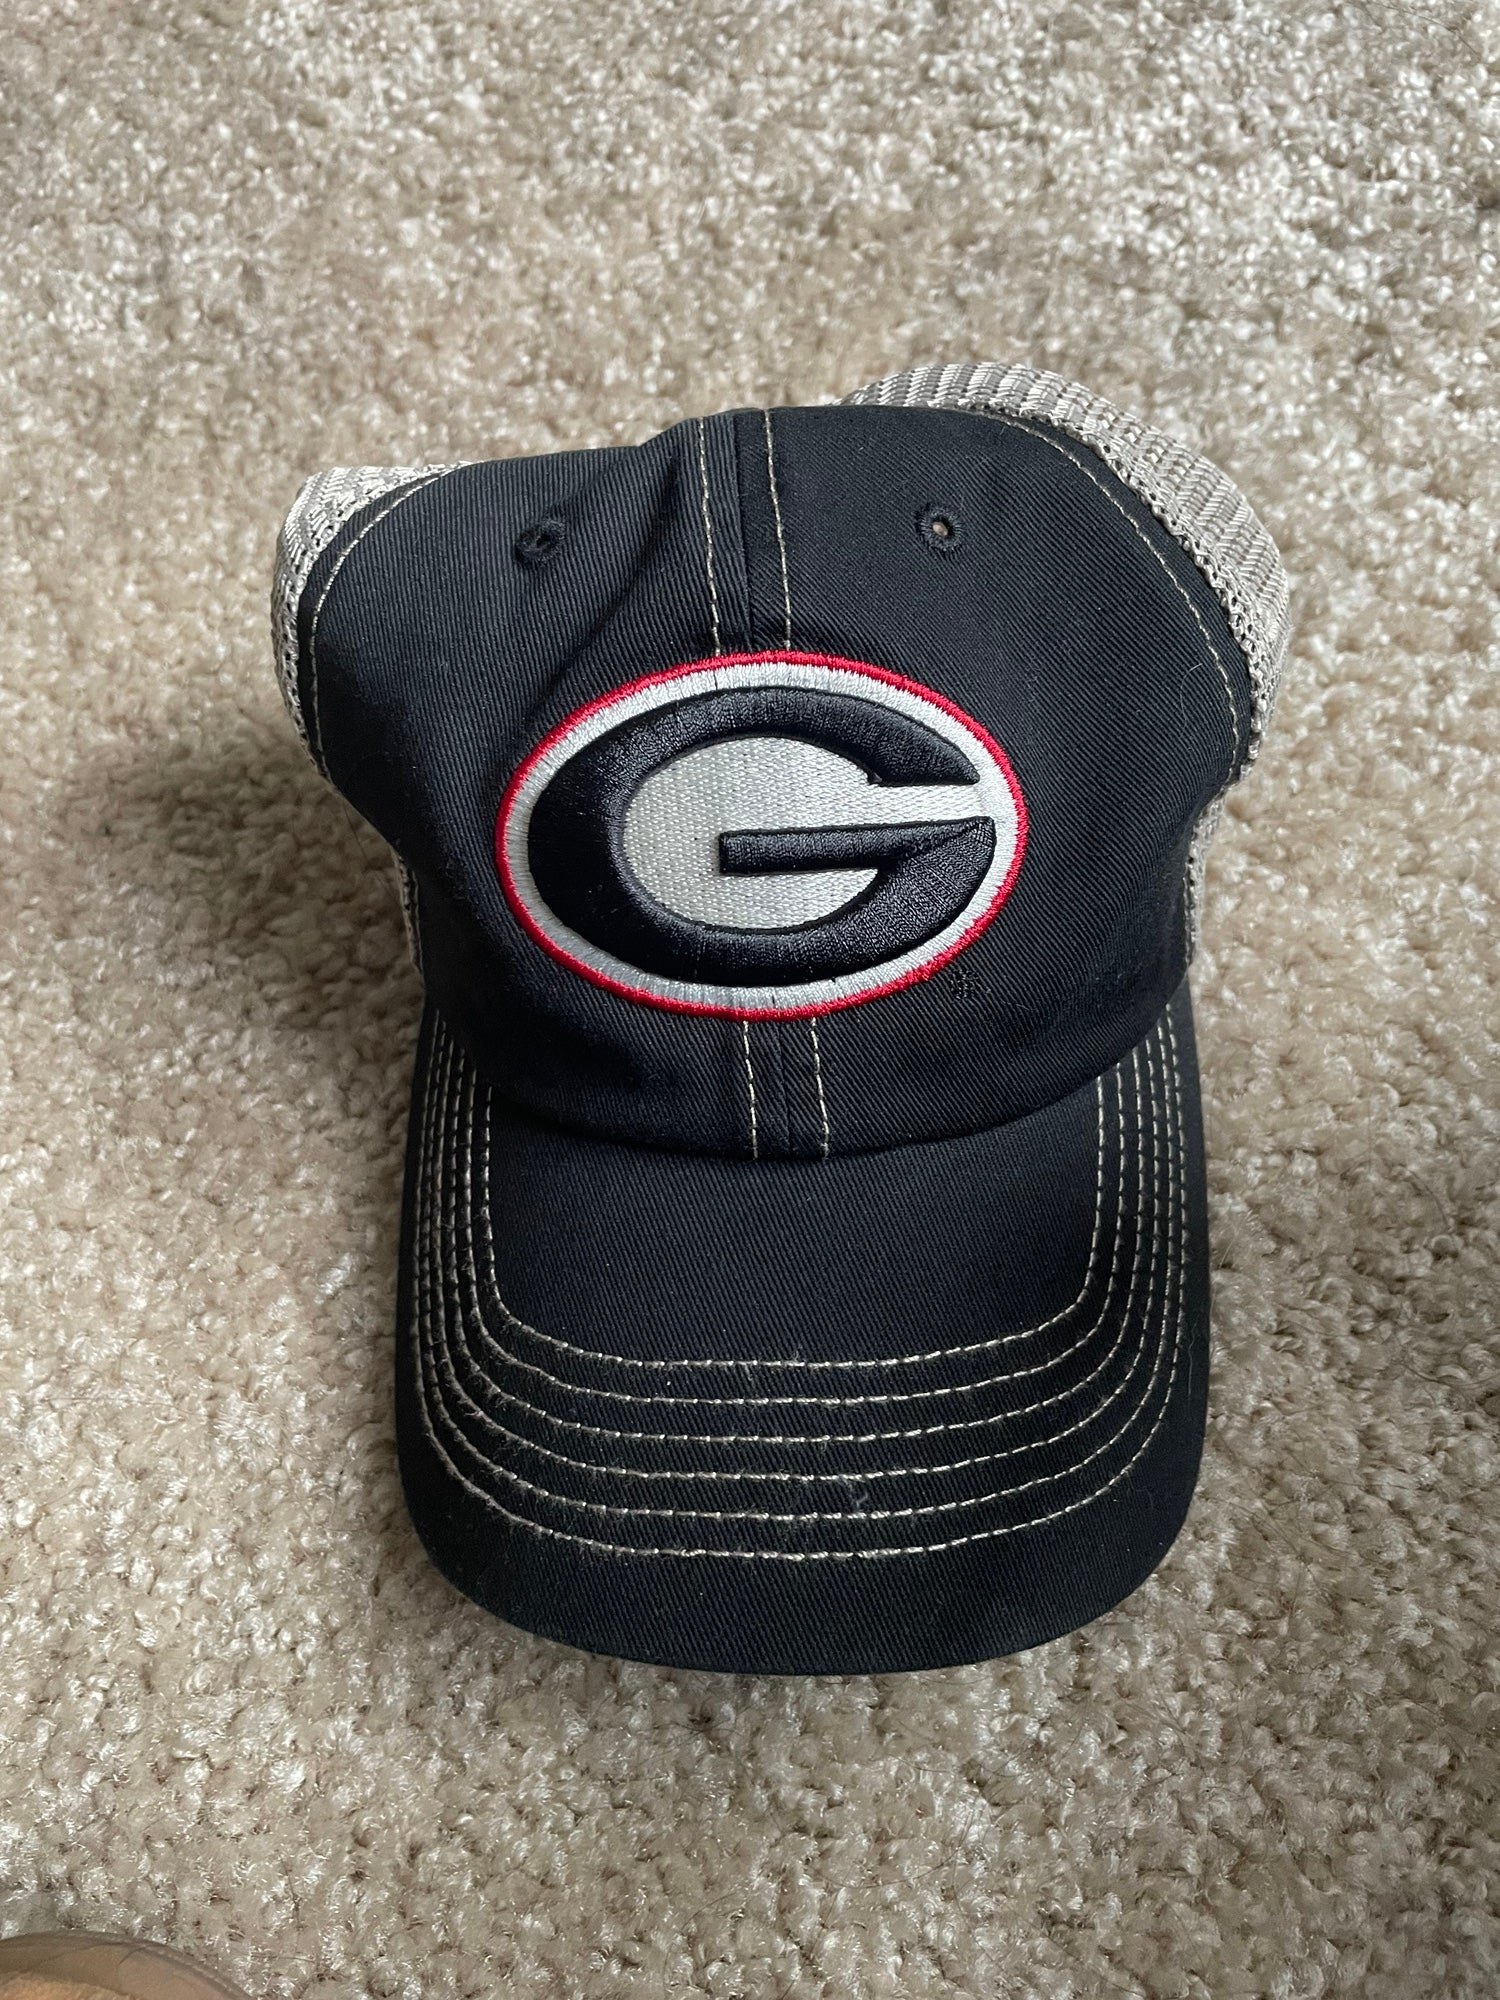 47 Brand Tan Georgia Bulldogs NCAA Clean Up Adjustable Hat Adult One S -  beyond exchange